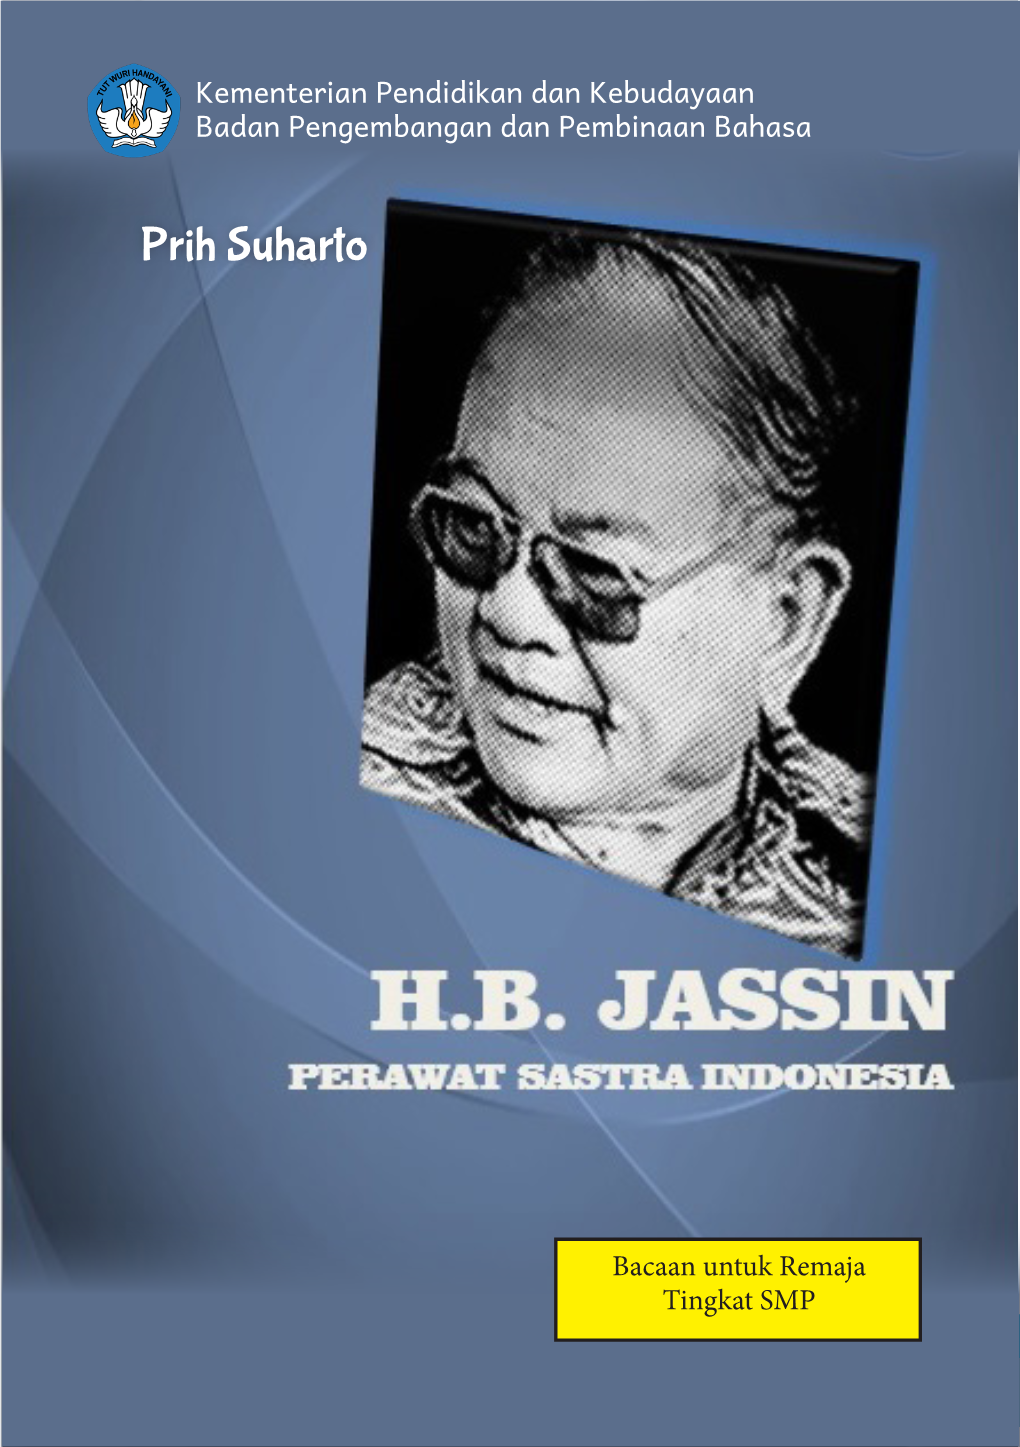 HB. Jassin Perawat Sastra Indonesia (Prih Suharto).Pdf